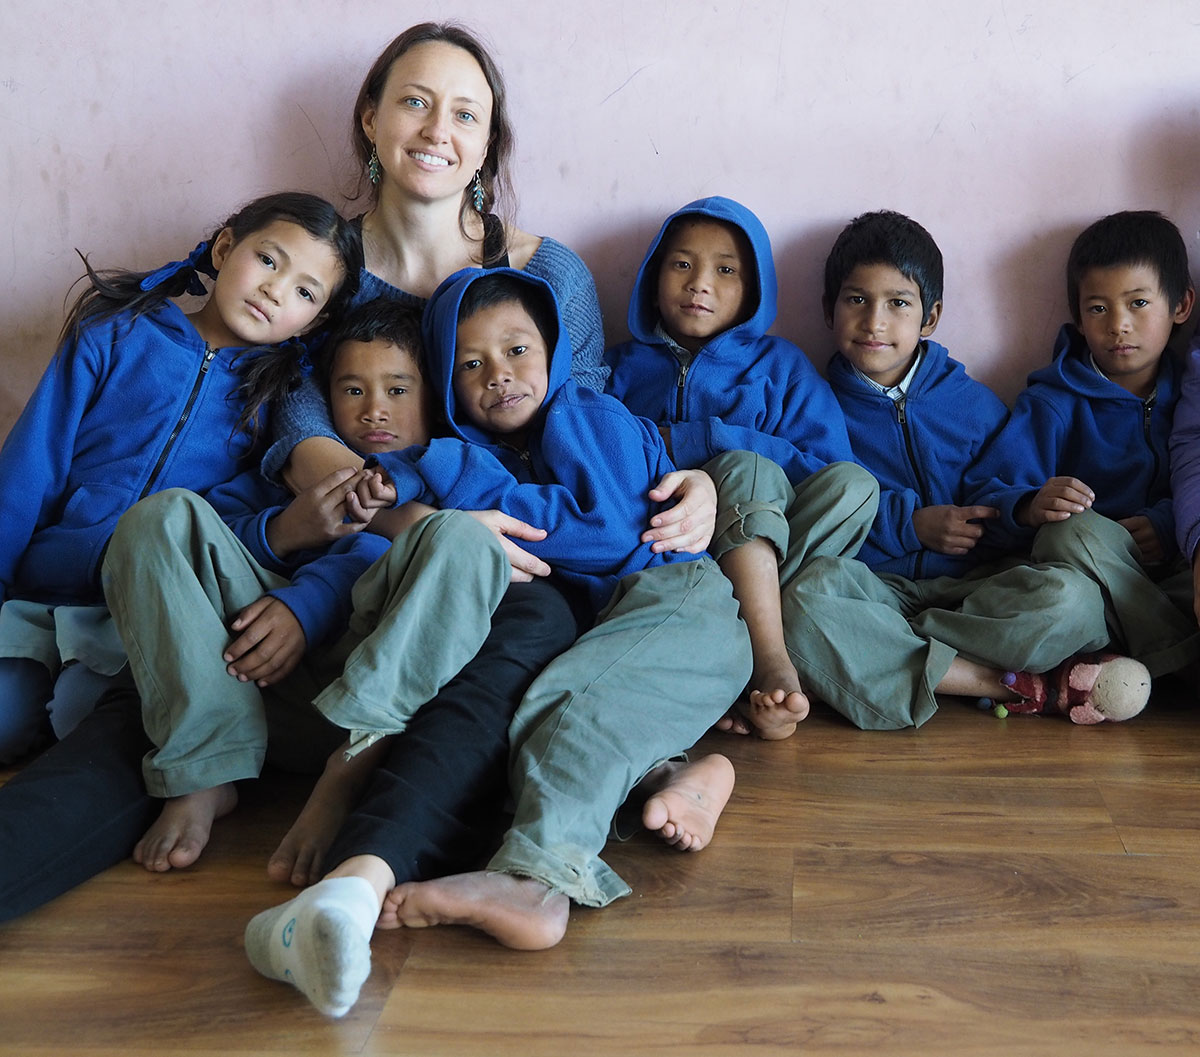 Amanda-Kids-Nepal-Peaceful.jpg